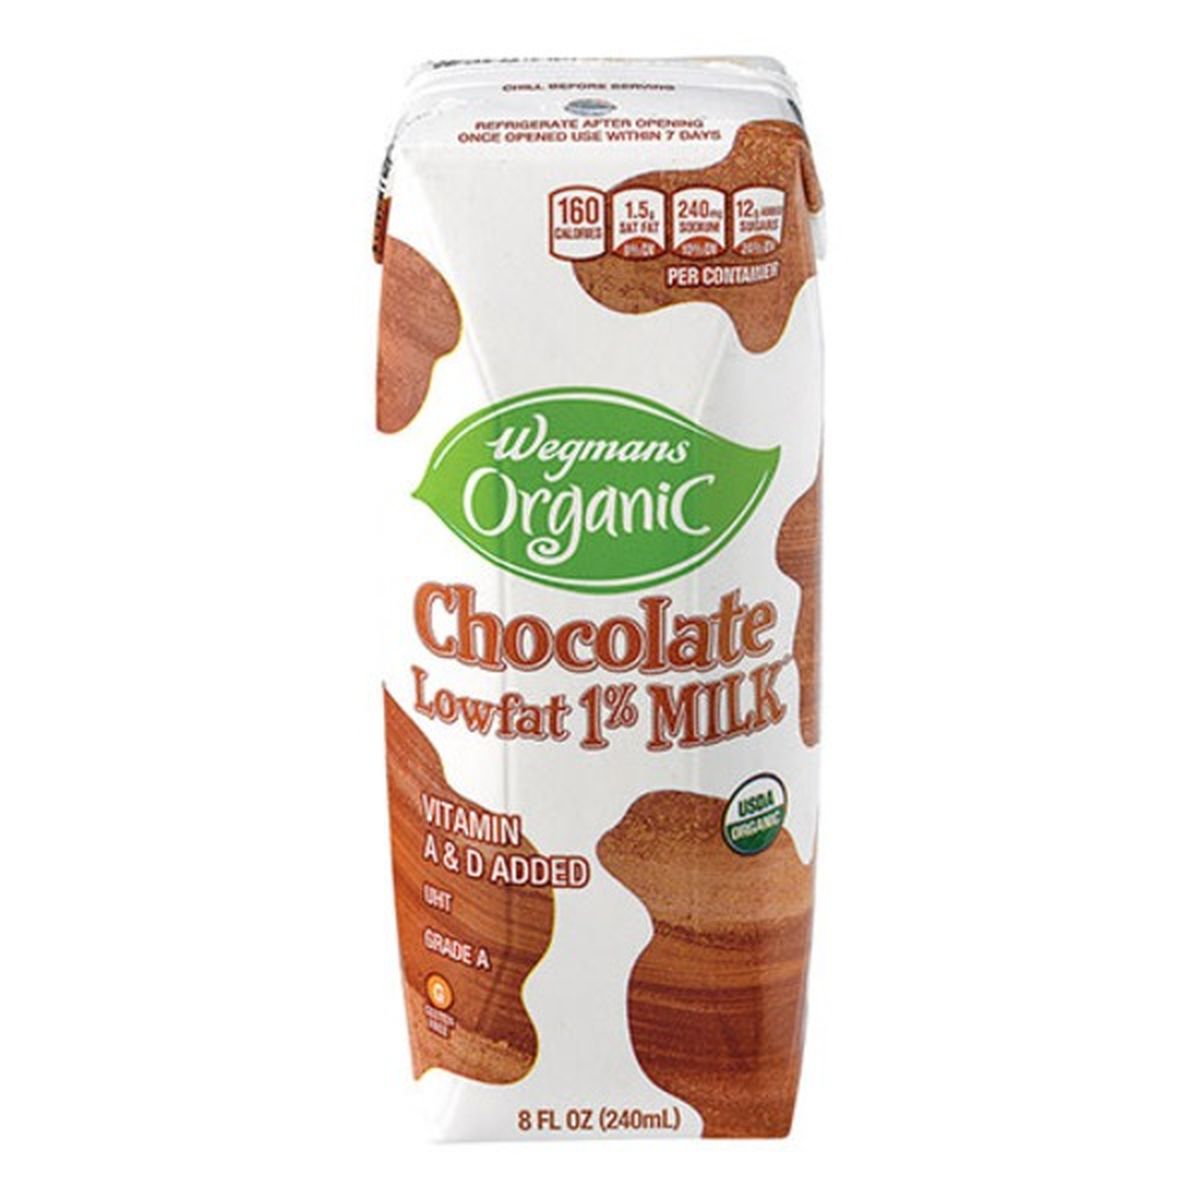 Calories in Wegmans Organic Chocolate Lowfat 1% Milk